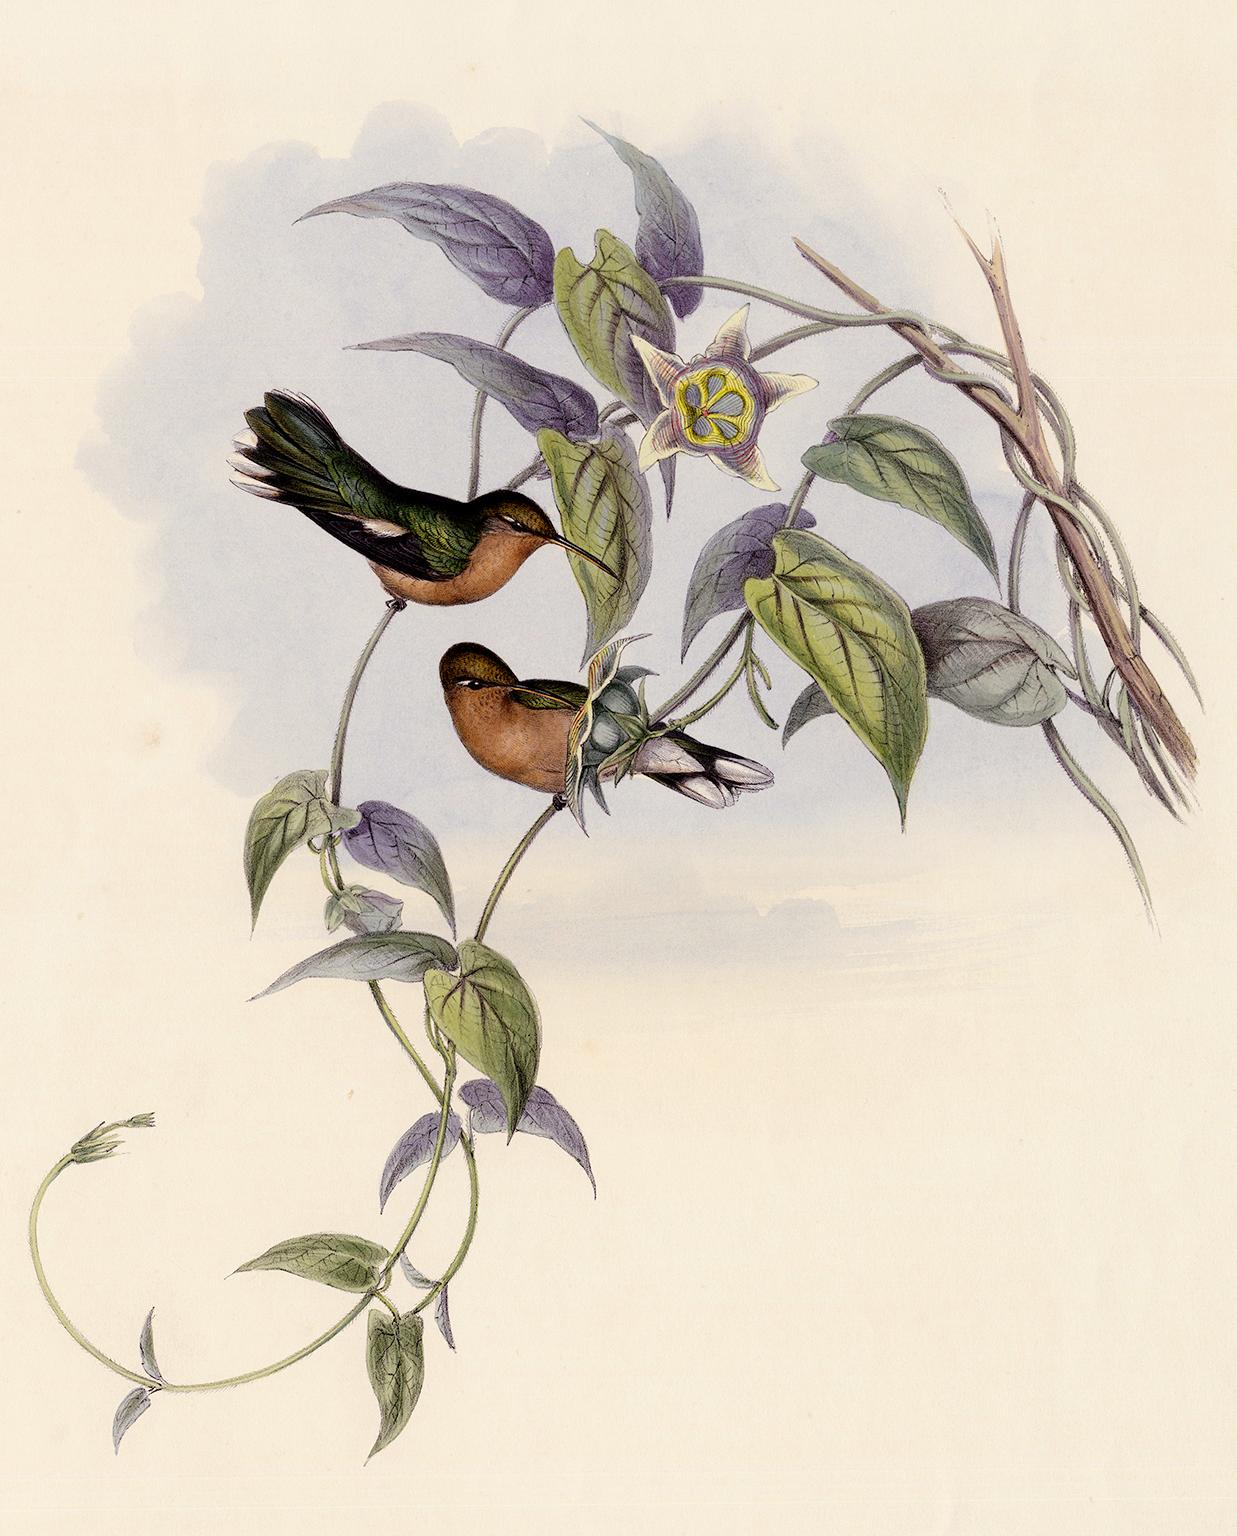 Leucippus Fallax (Buffy Hummingbird) — Original 1849 Hand-colored Lithograph